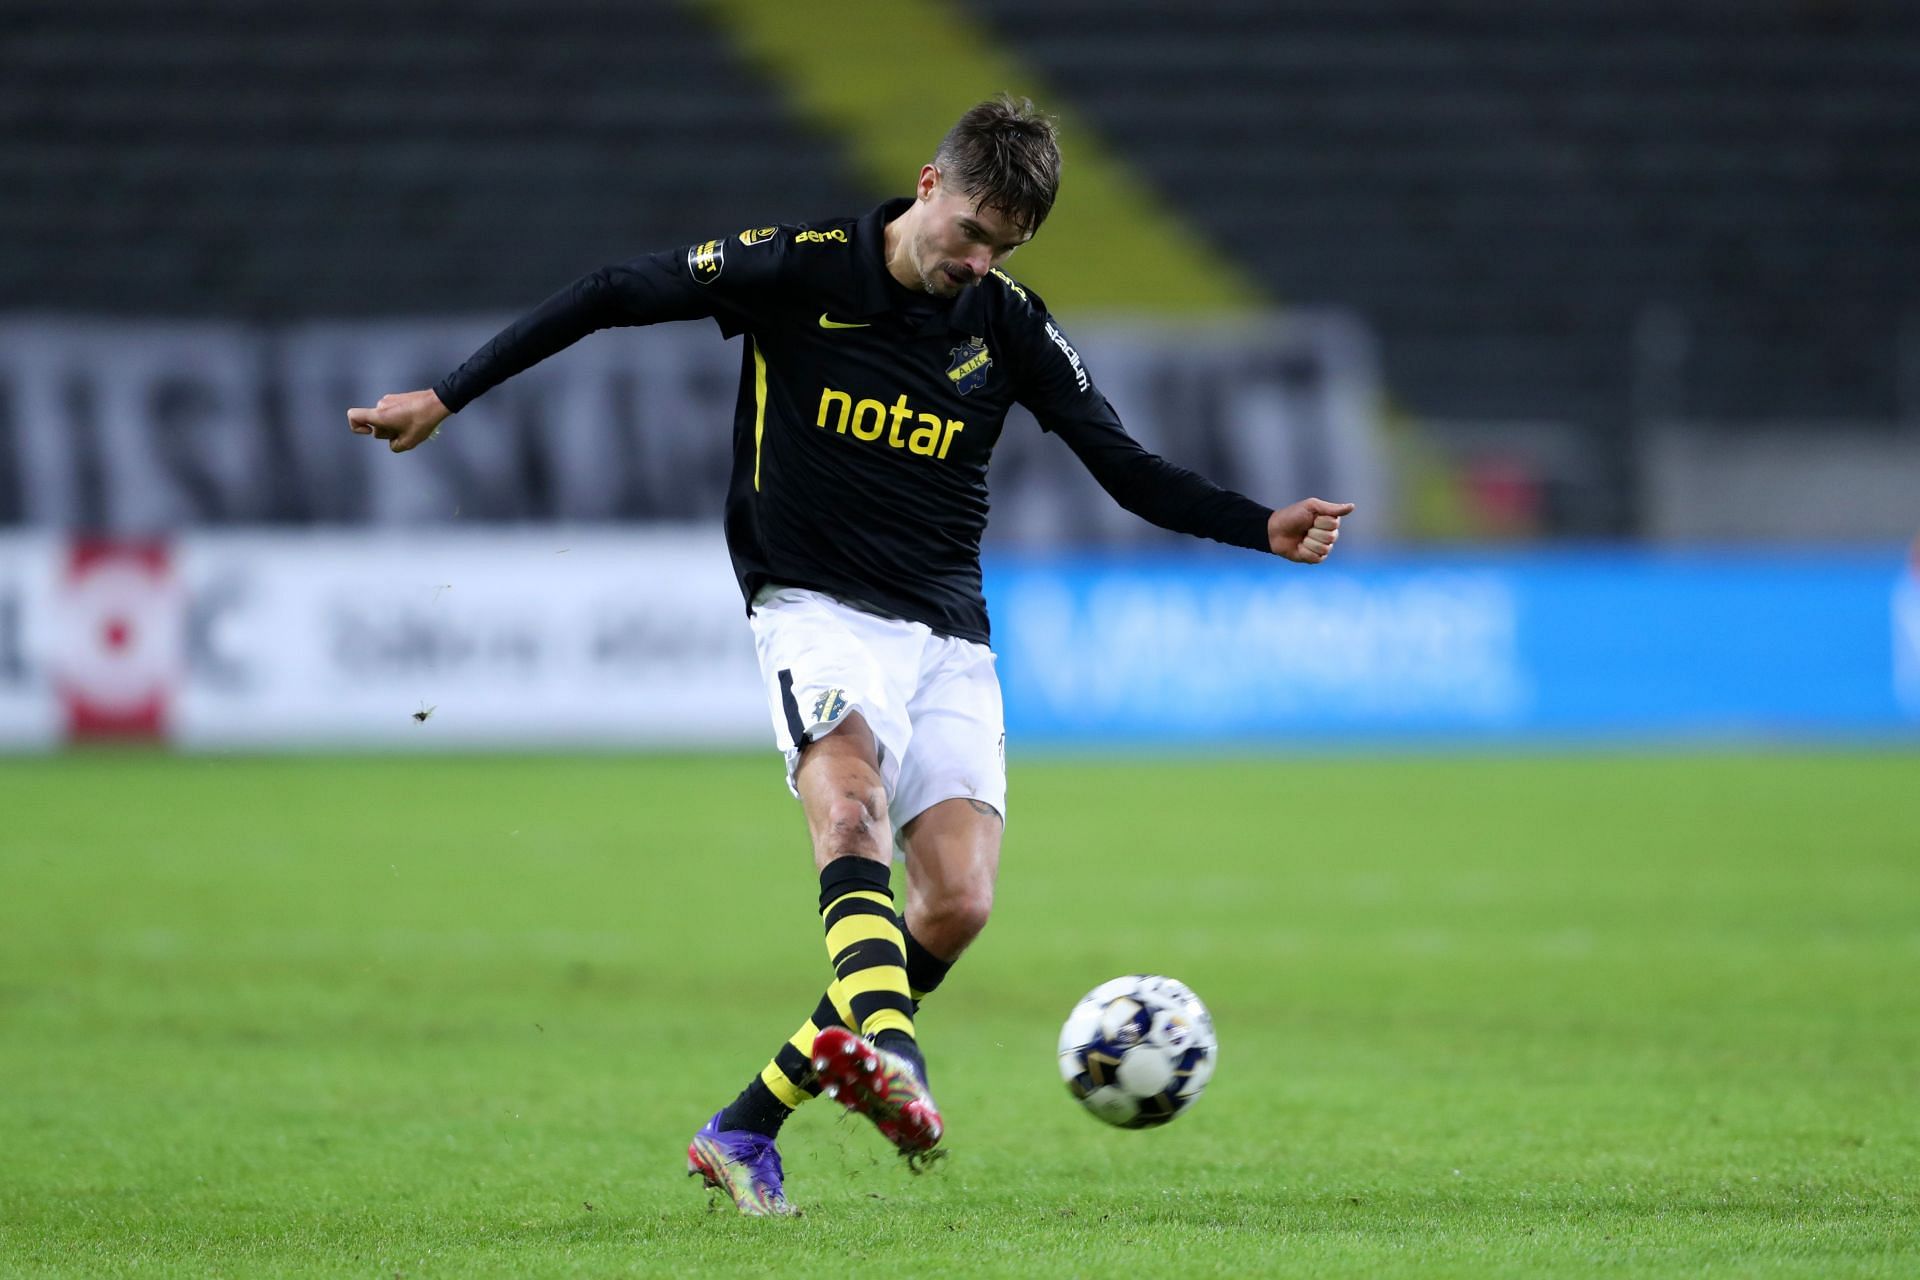 AIK play host to Varnamo on Sunday